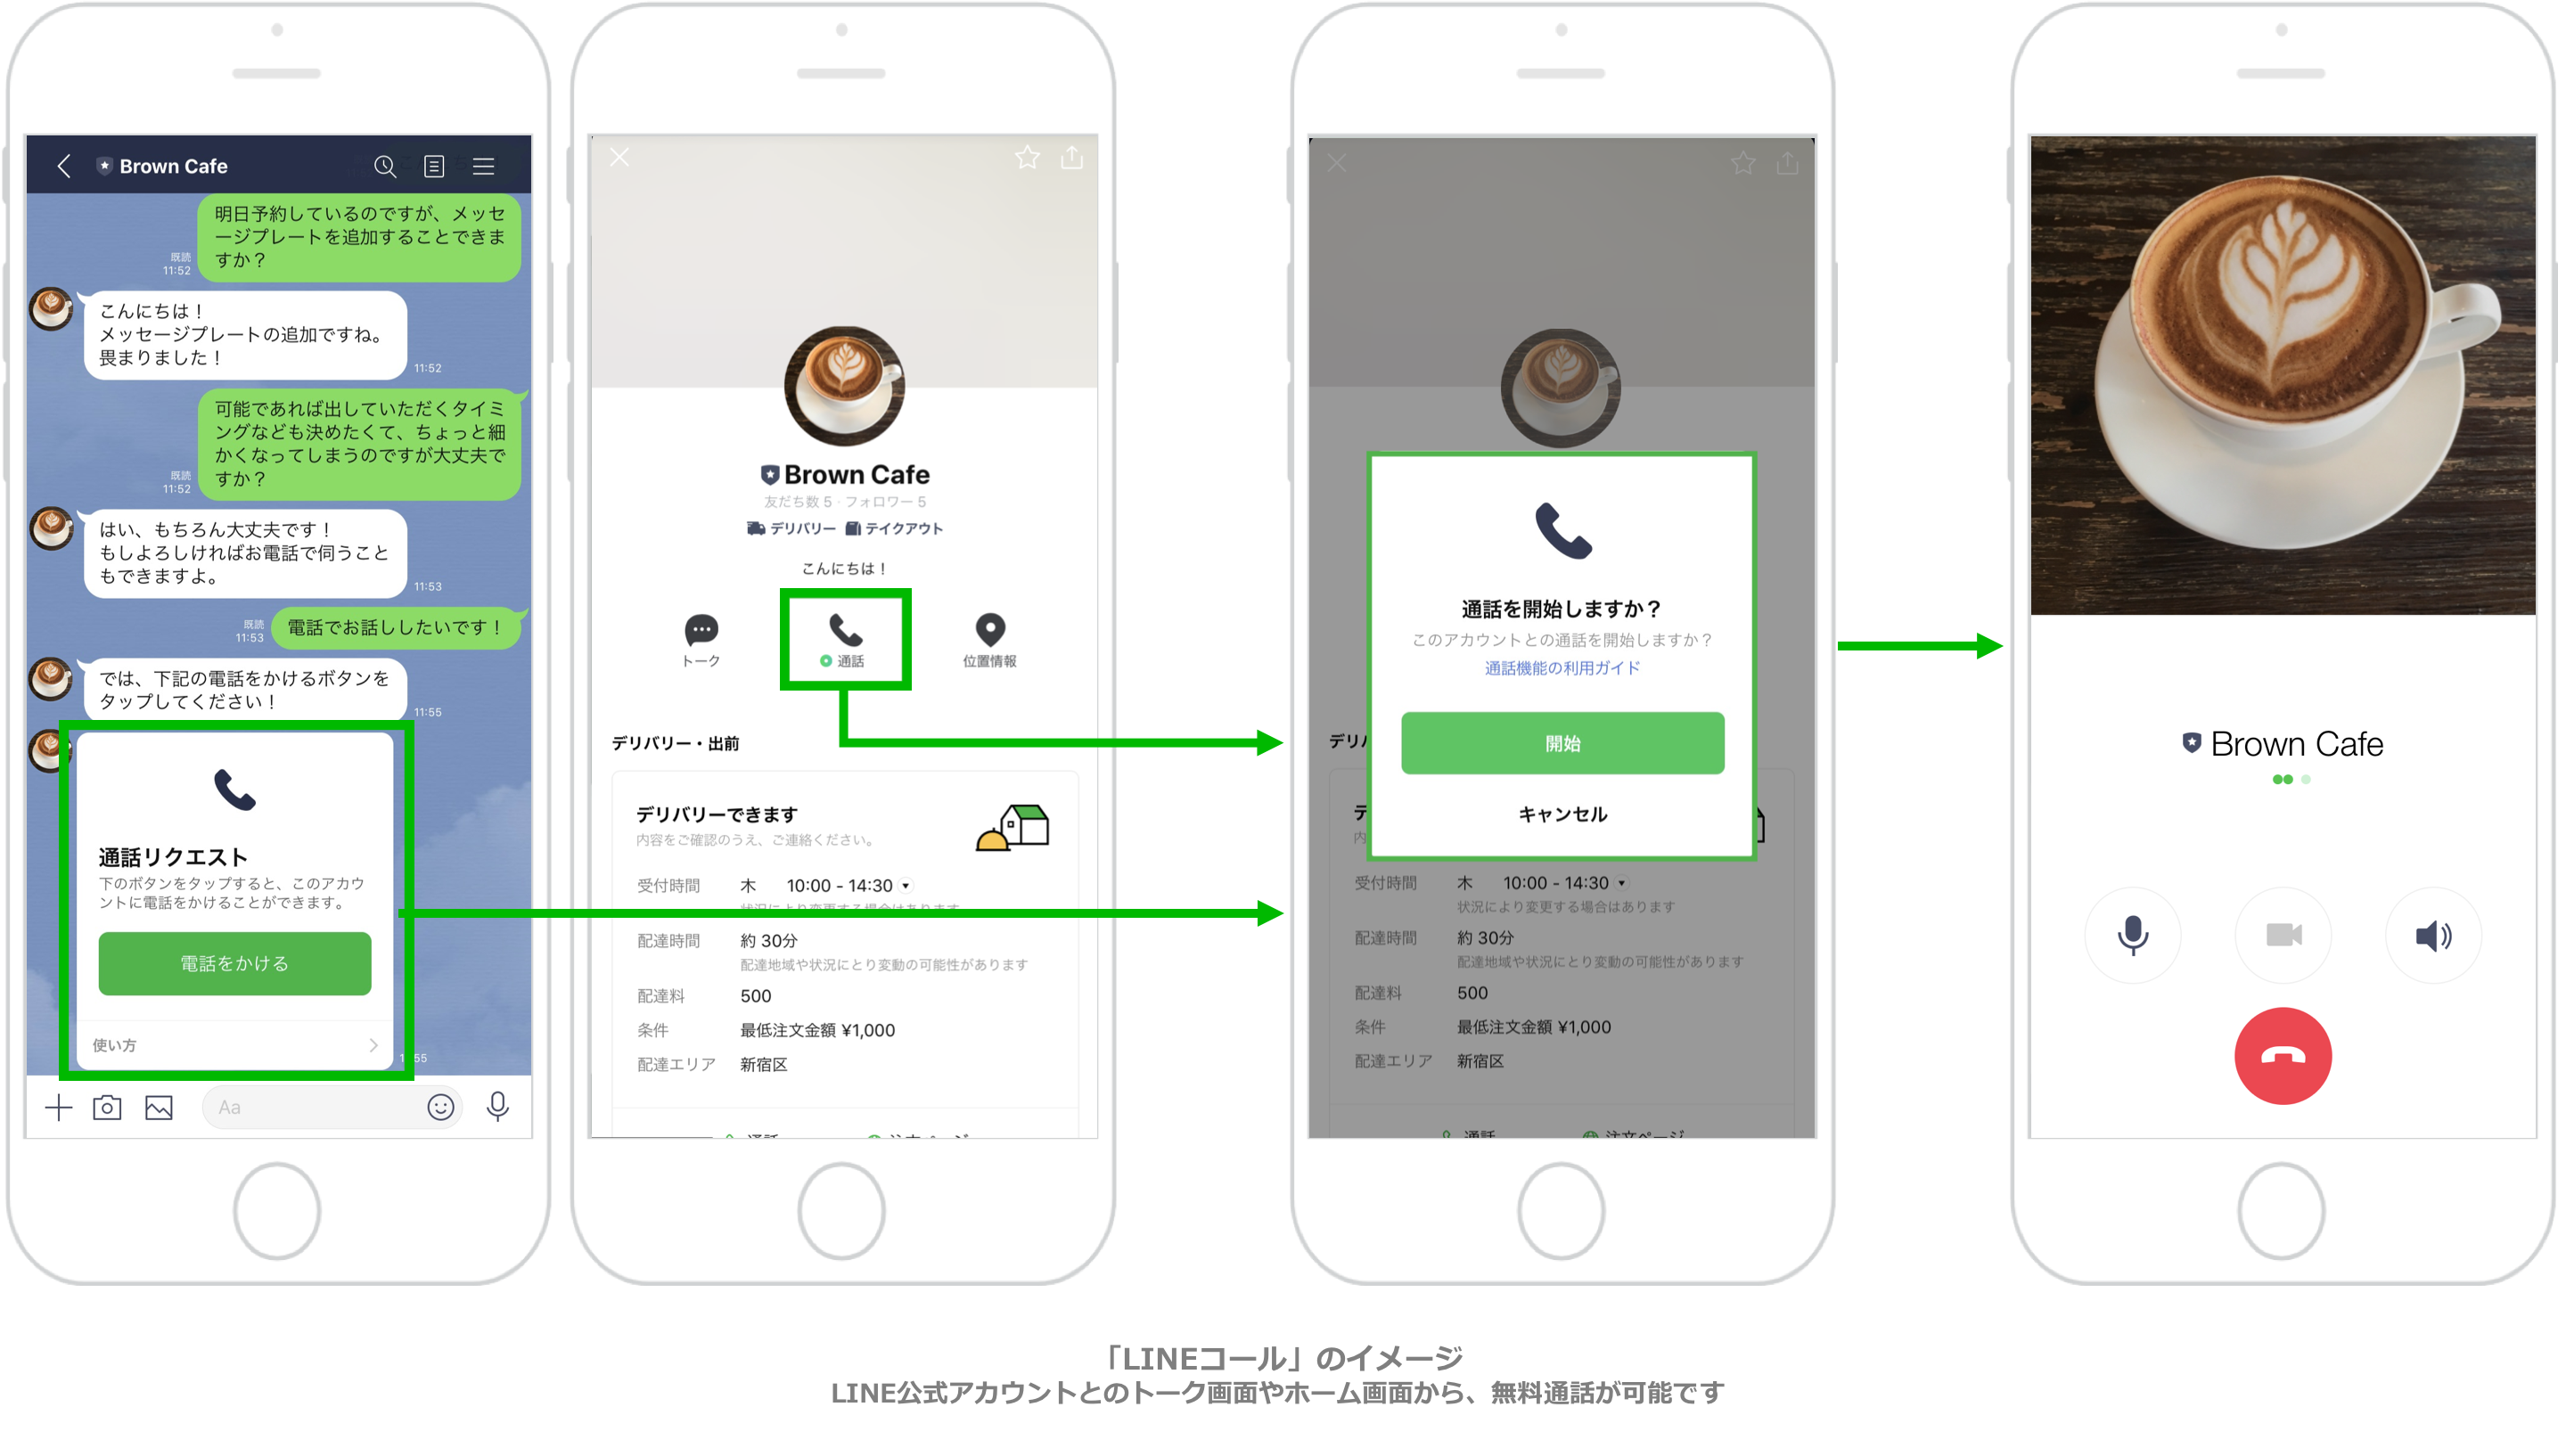 Line公式アカウントと通話ができる Lineコール の提供を開始ユーザー同士の通話と同じ感覚で Line上から無料通話が可能に Line 株式会社のプレスリリース